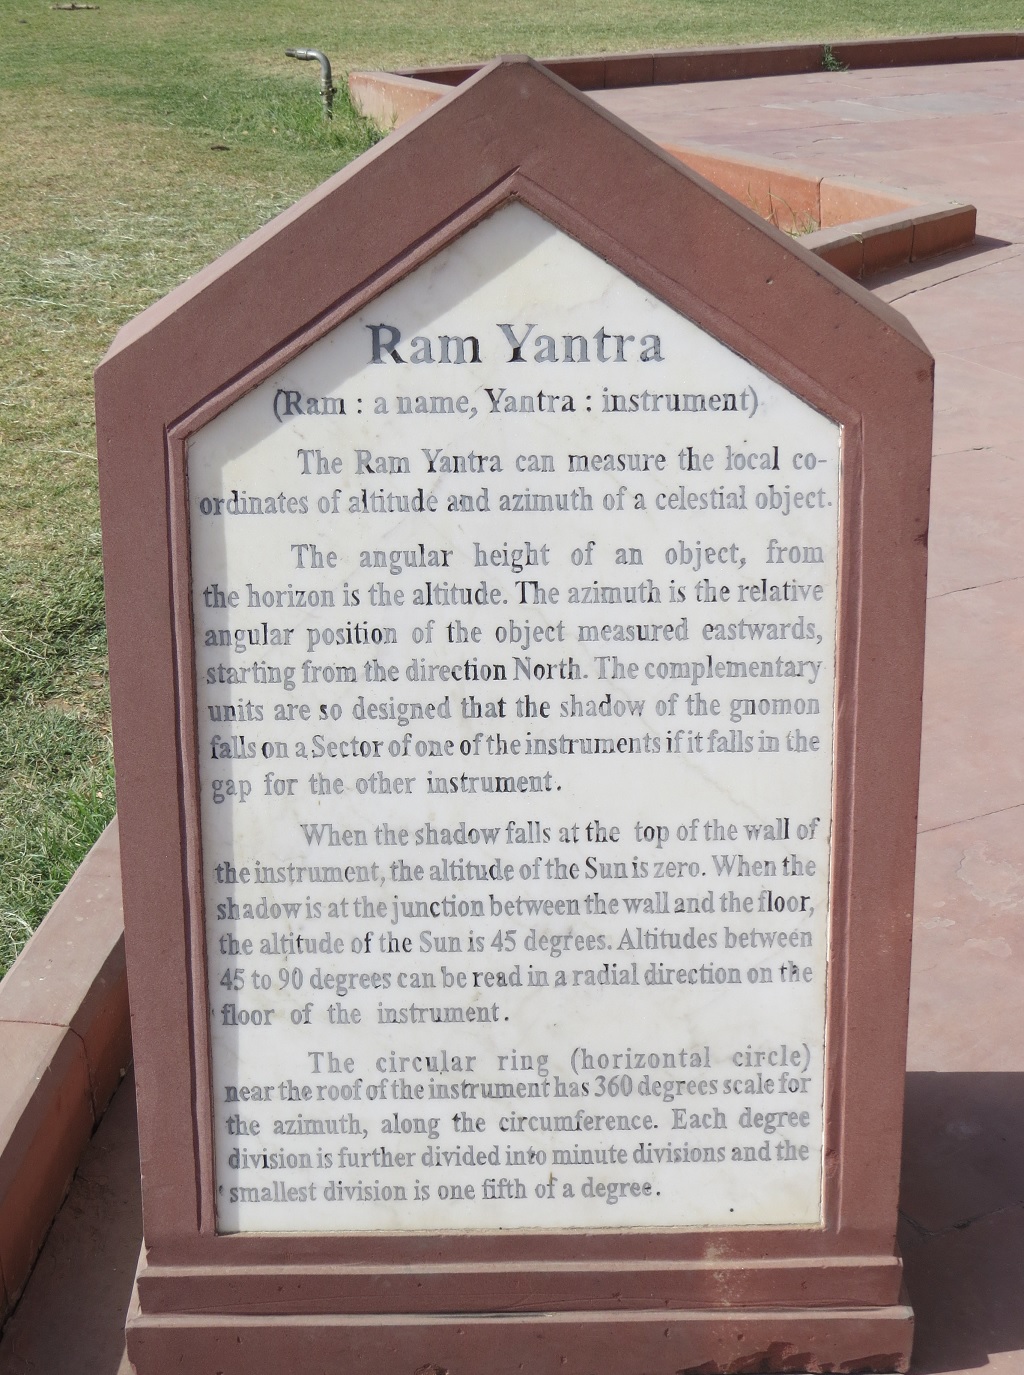 About: Ram Yantra (Ram: a name, Yantra: instrument)